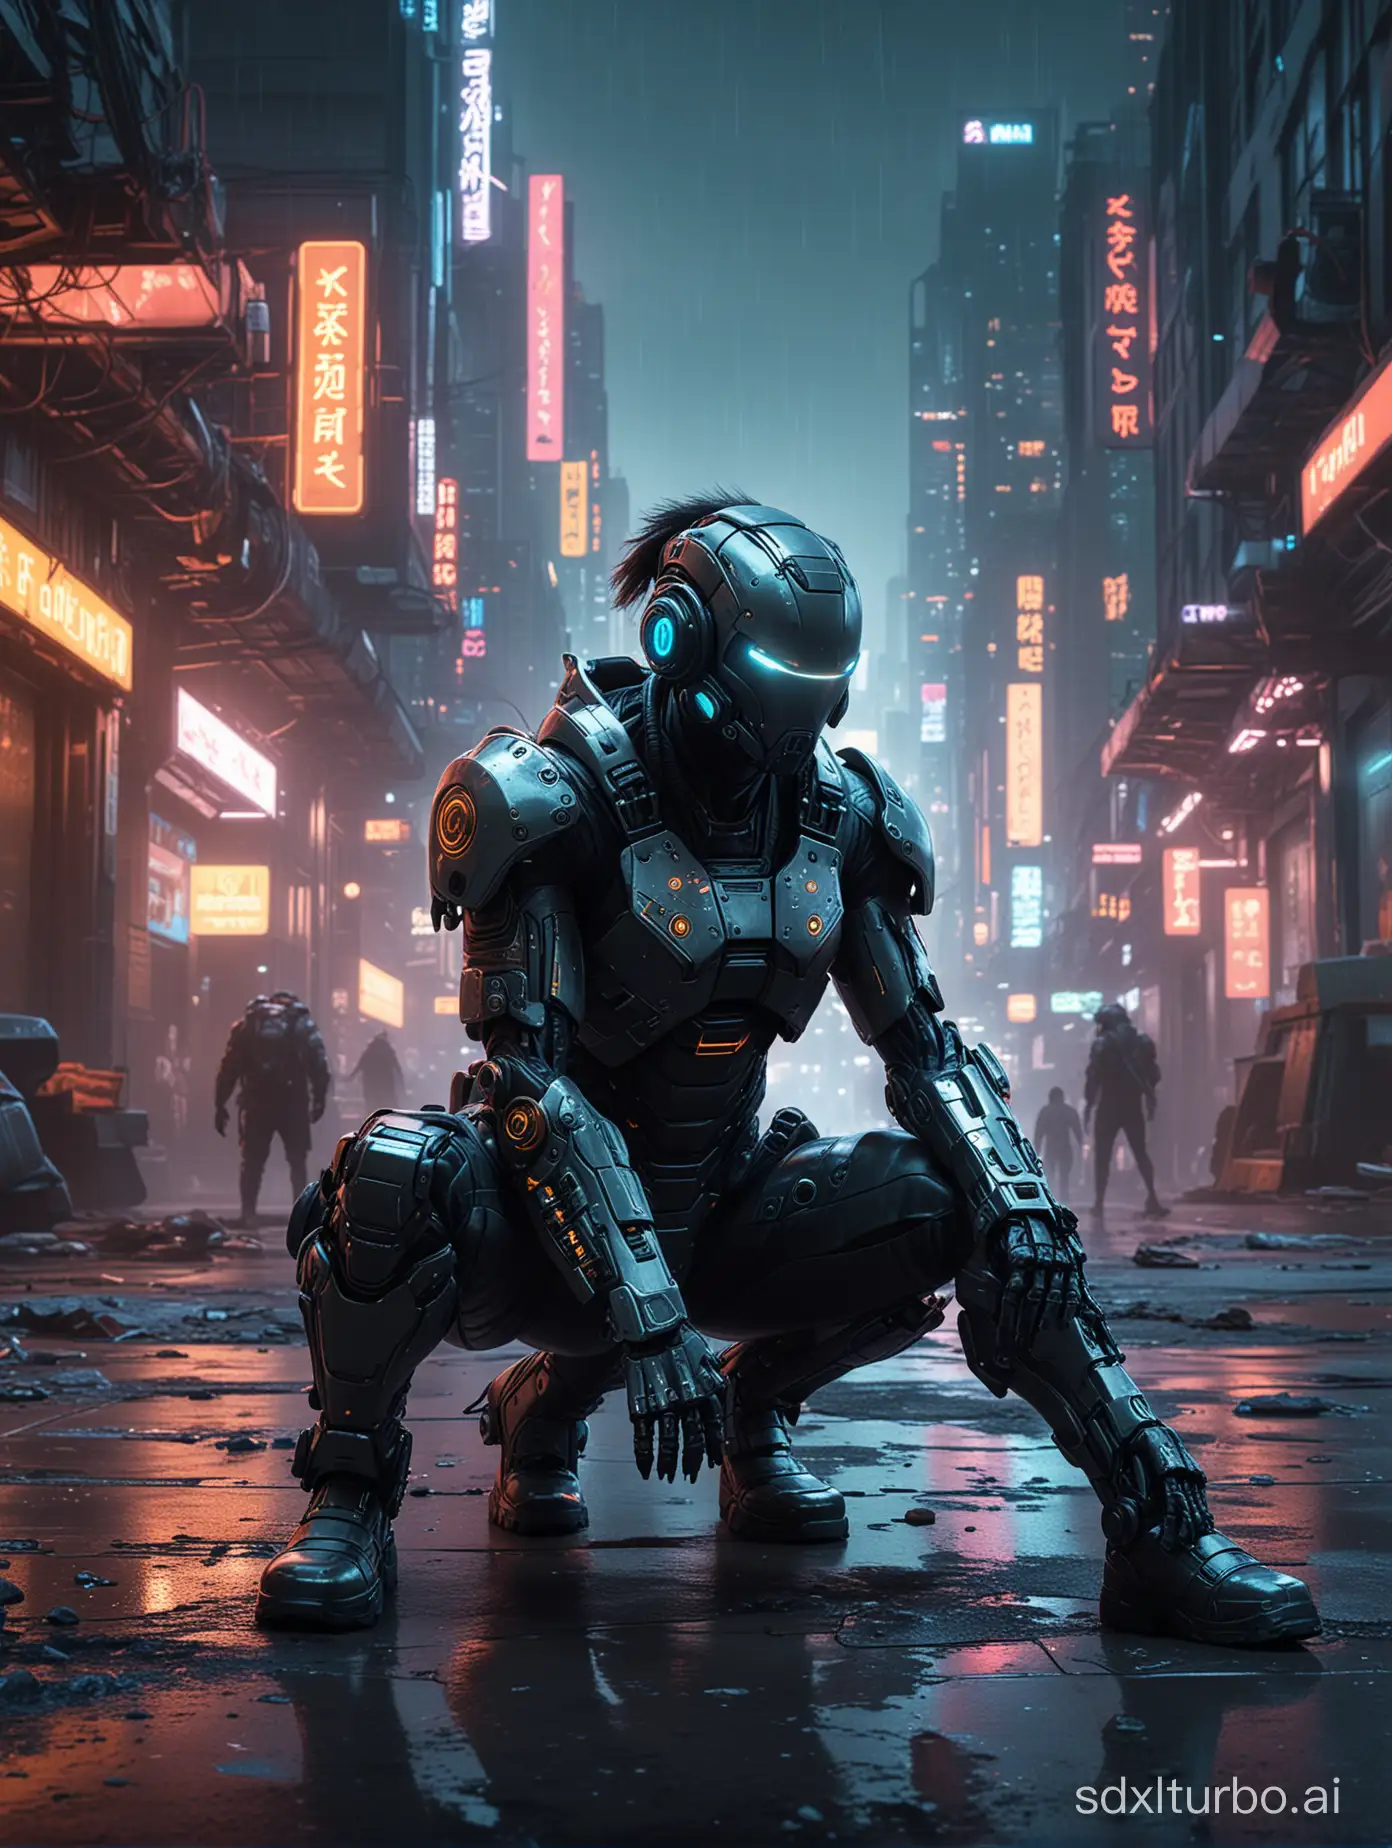 Futuristic-Cyberpunk-Warrior-Landing-in-Urban-Setting